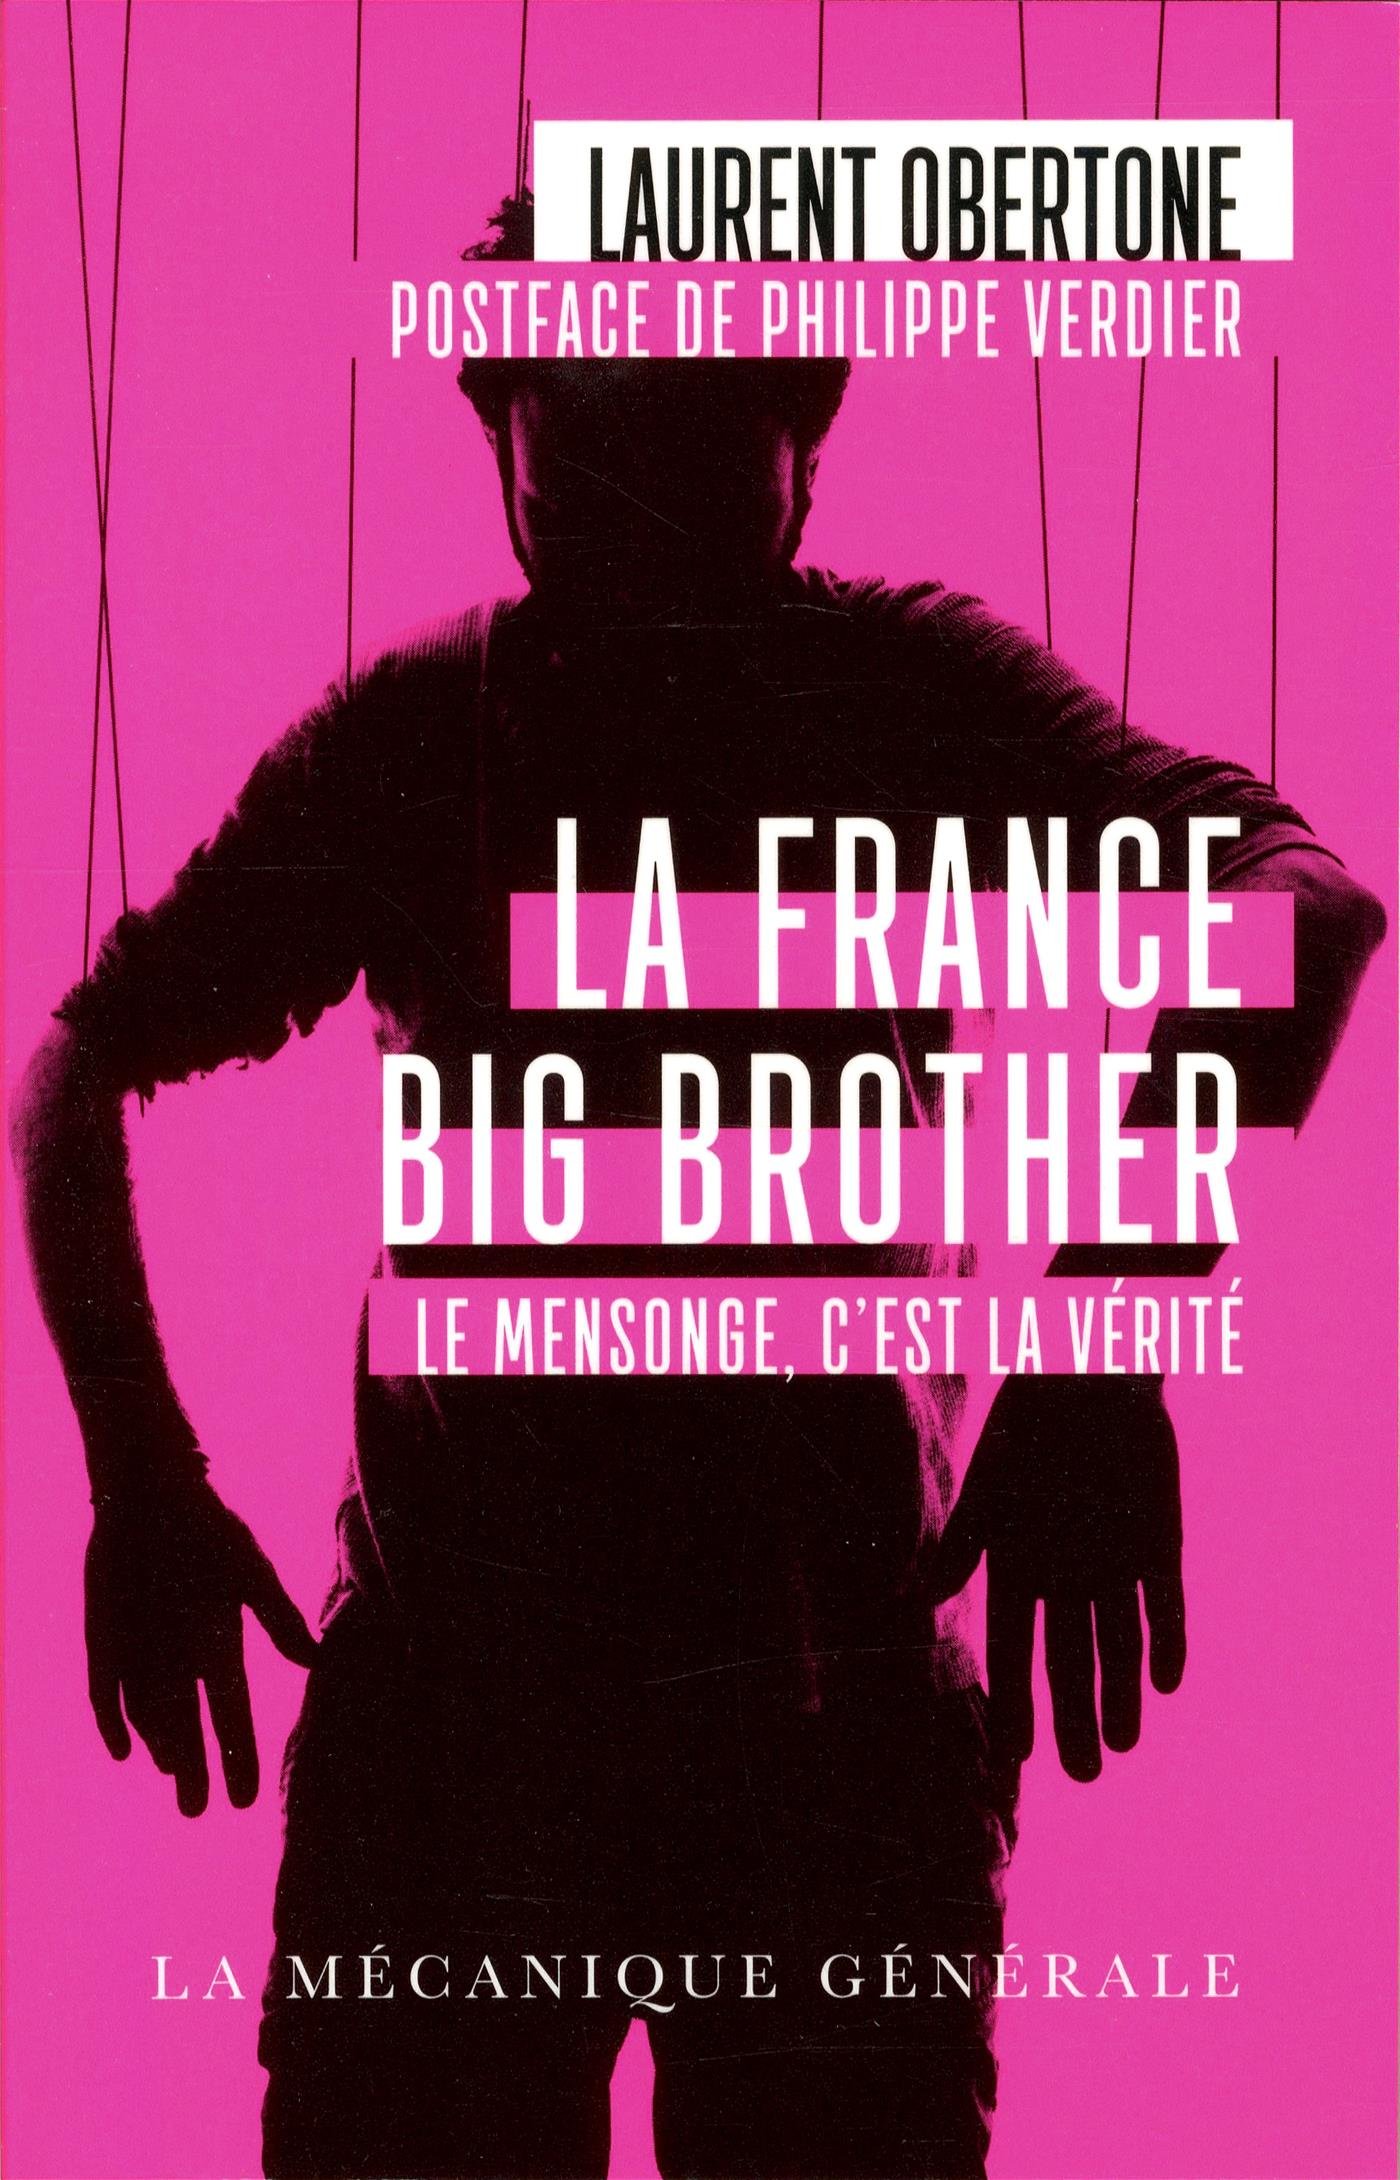 Laurent Obertone: “La France Orange mécanique” et la “France Big Brother”